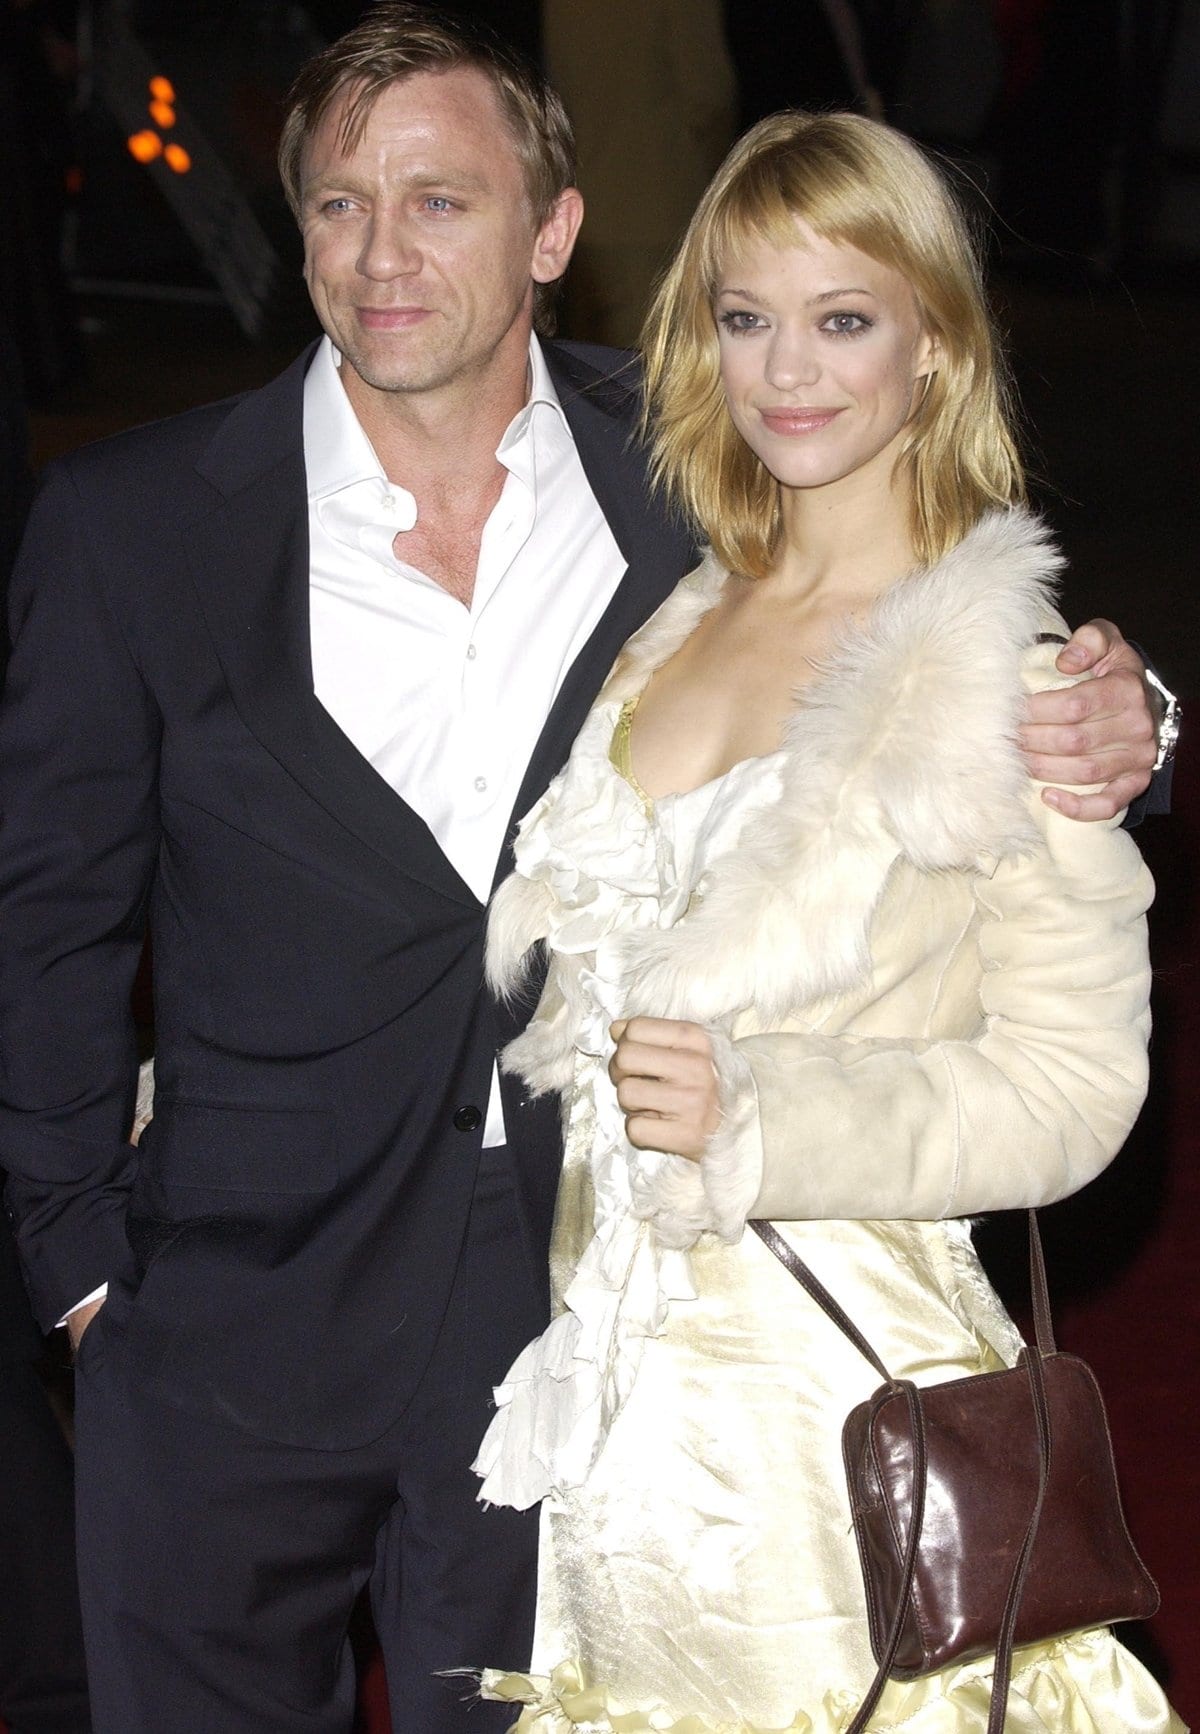 Daniel Craig dated German actress Heike Makatsch split in 2004 after dating for seven years